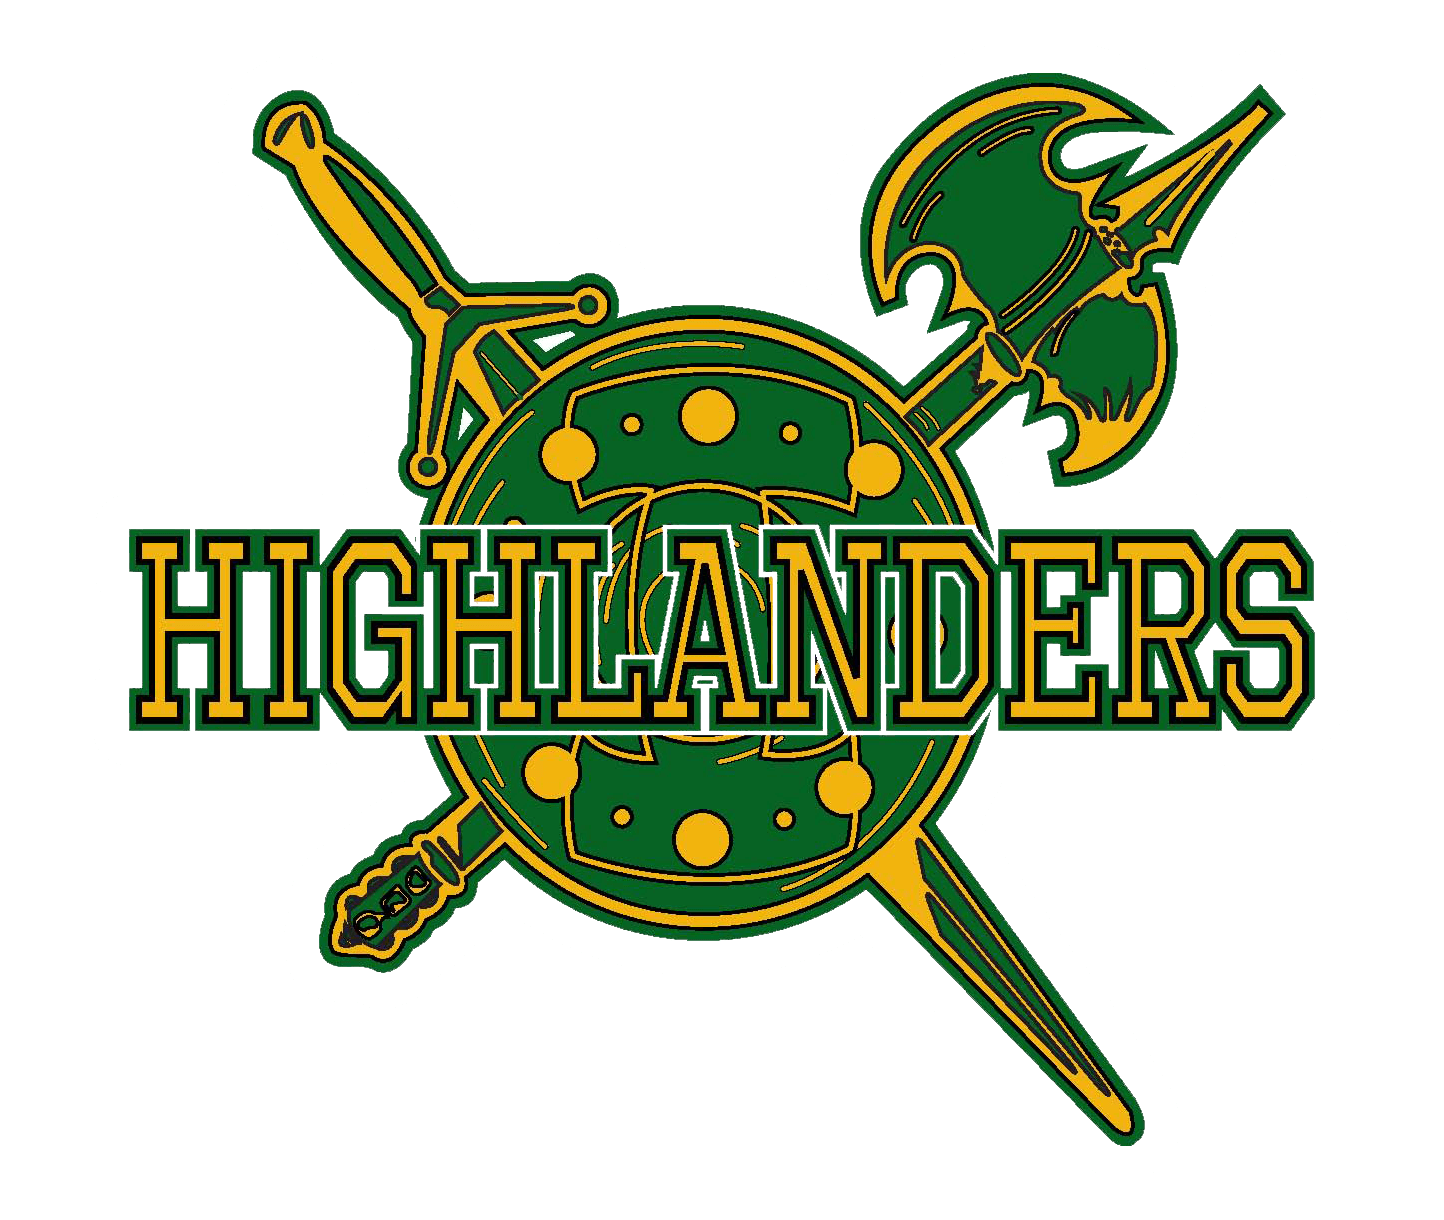 Highlanders Logo - Incline - Team Home Incline Highlanders Sports